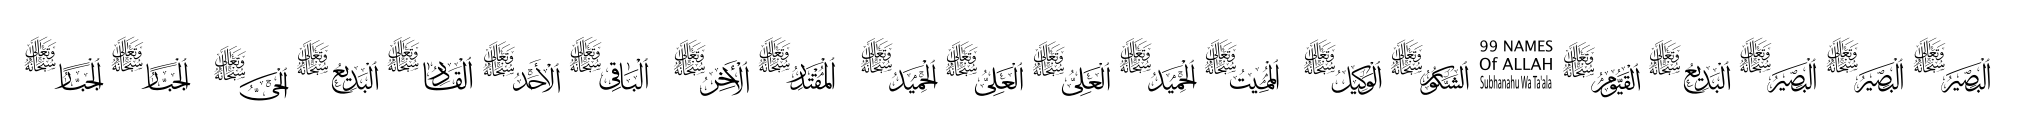 99 Names of ALLAH Subhanahu image